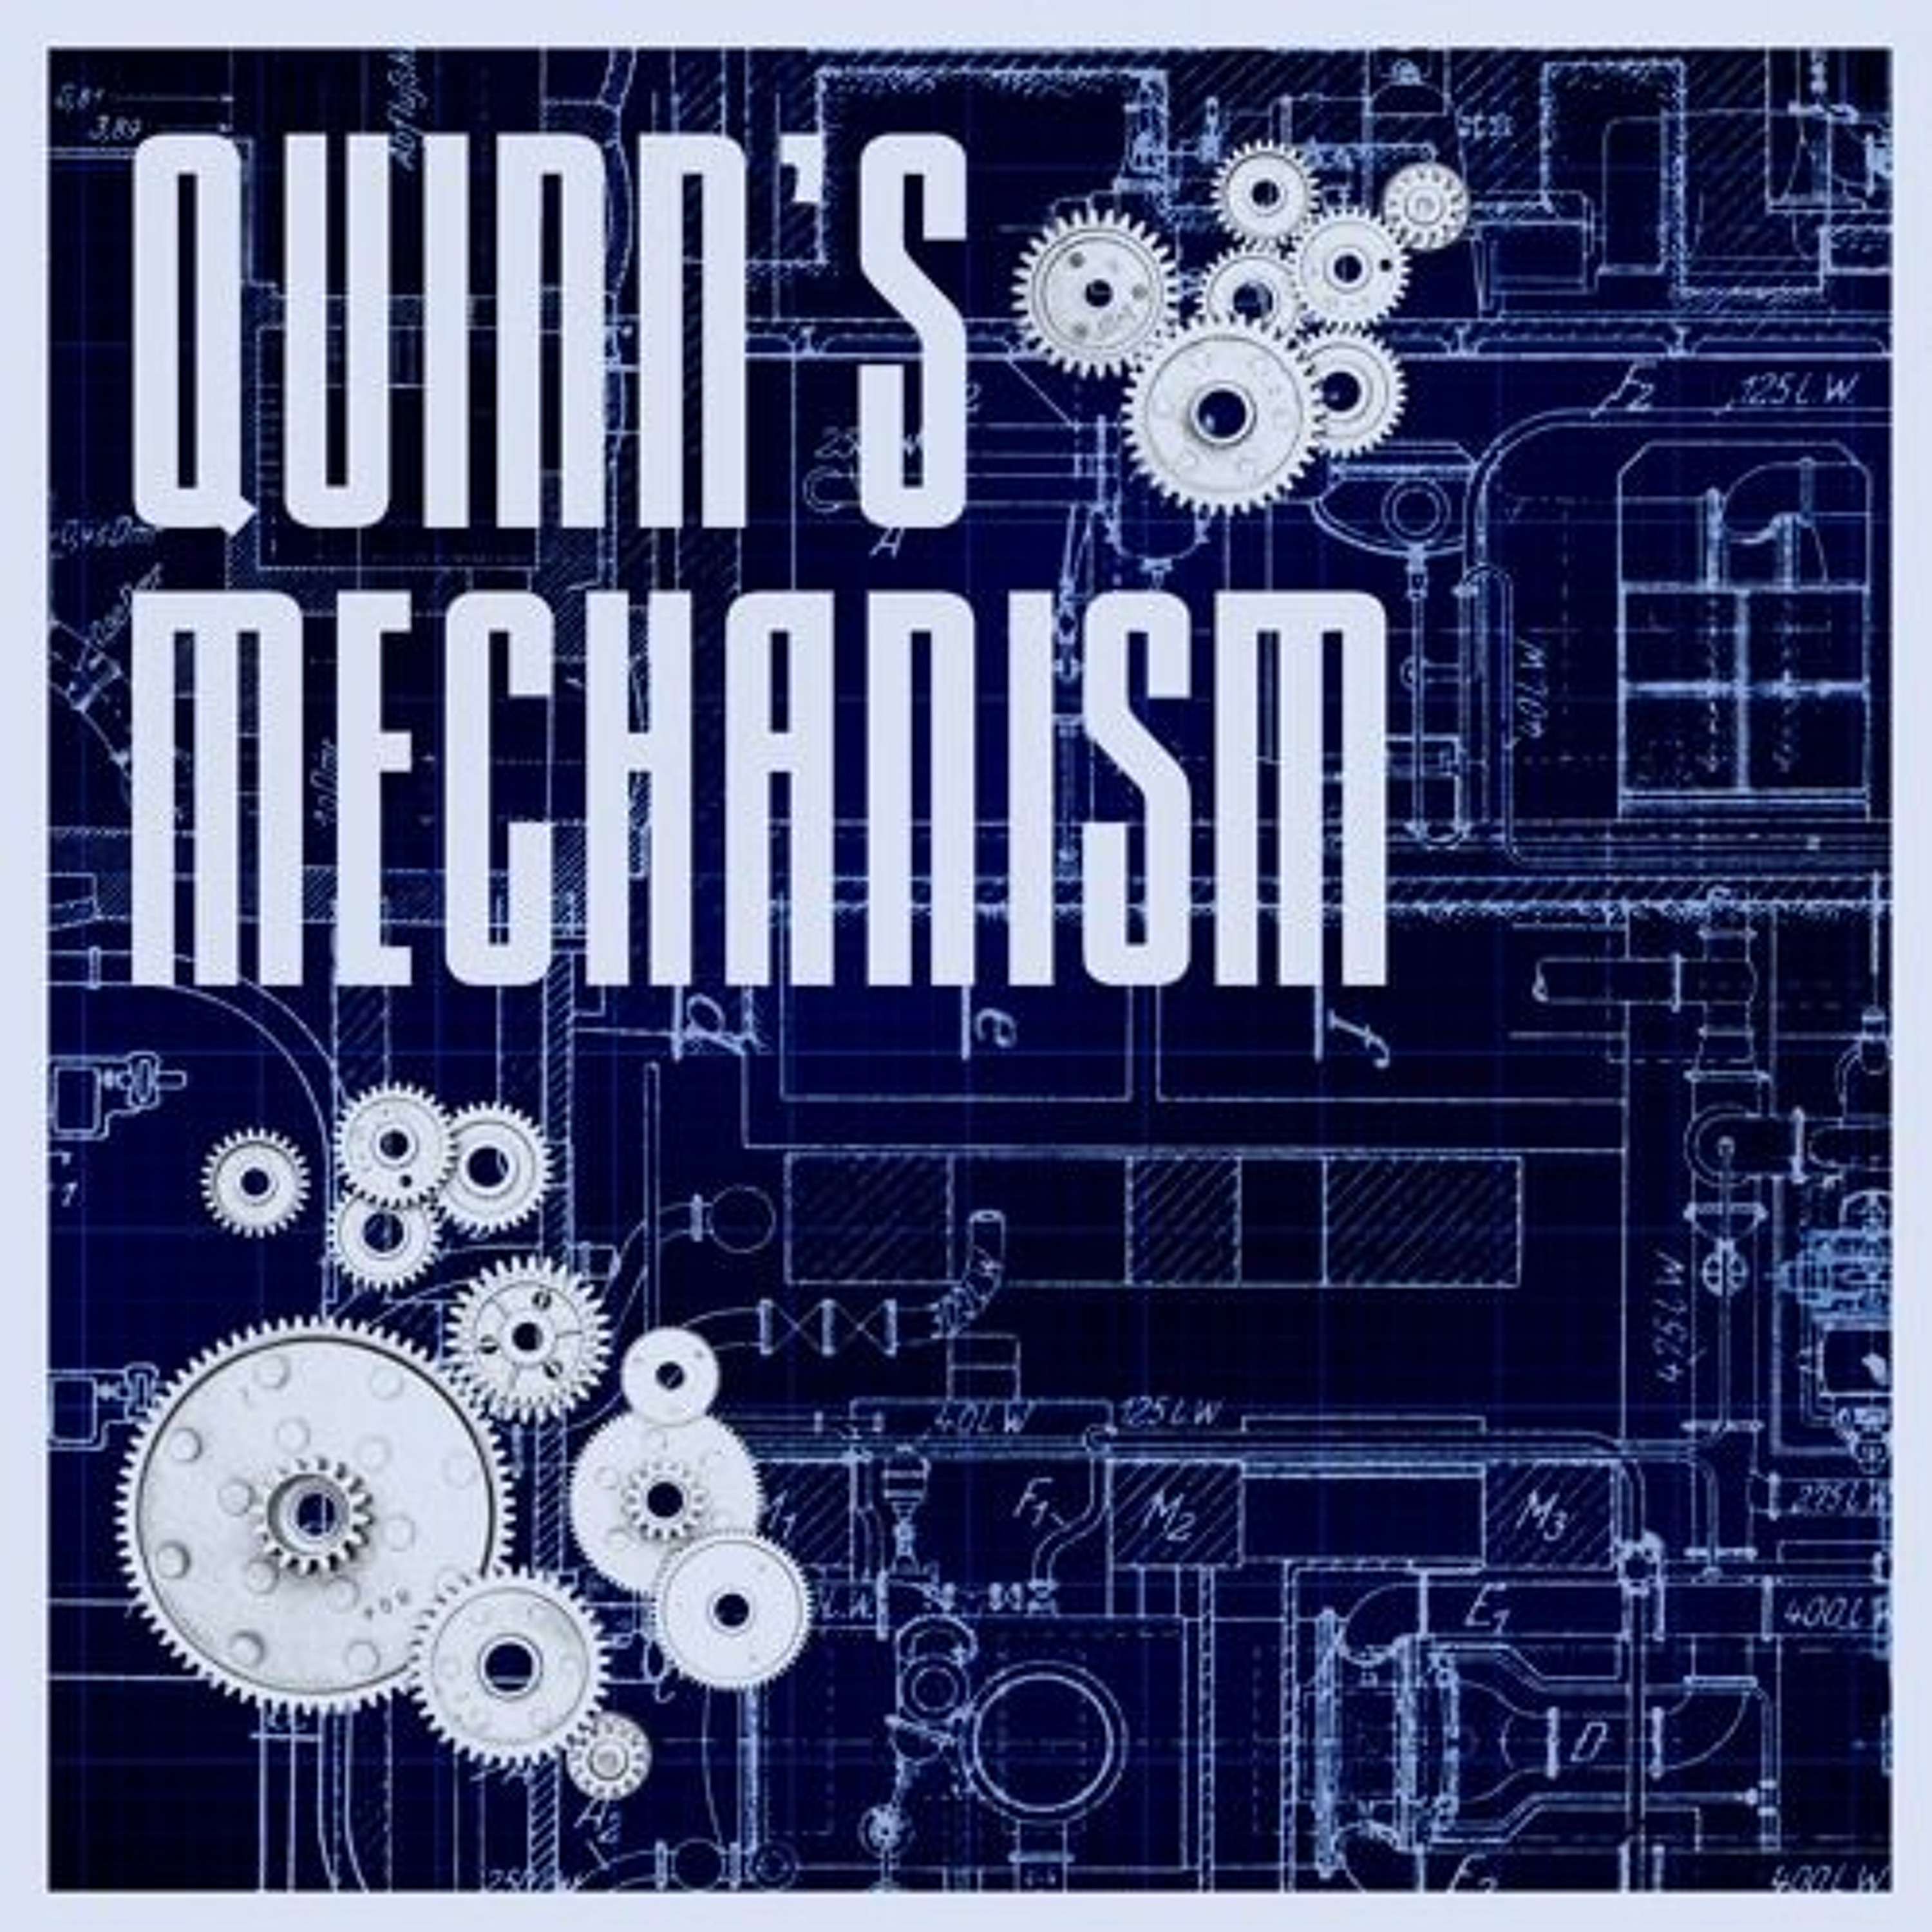 Quinn’s Mechanism - Third Act, The First Component